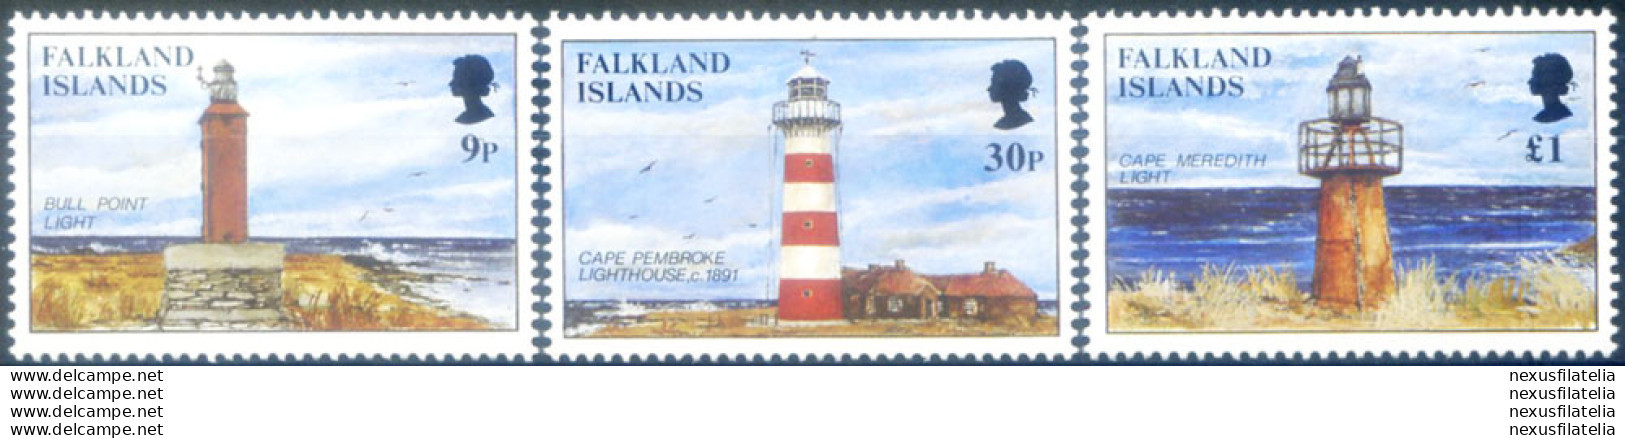 Fari 1997. - Falkland